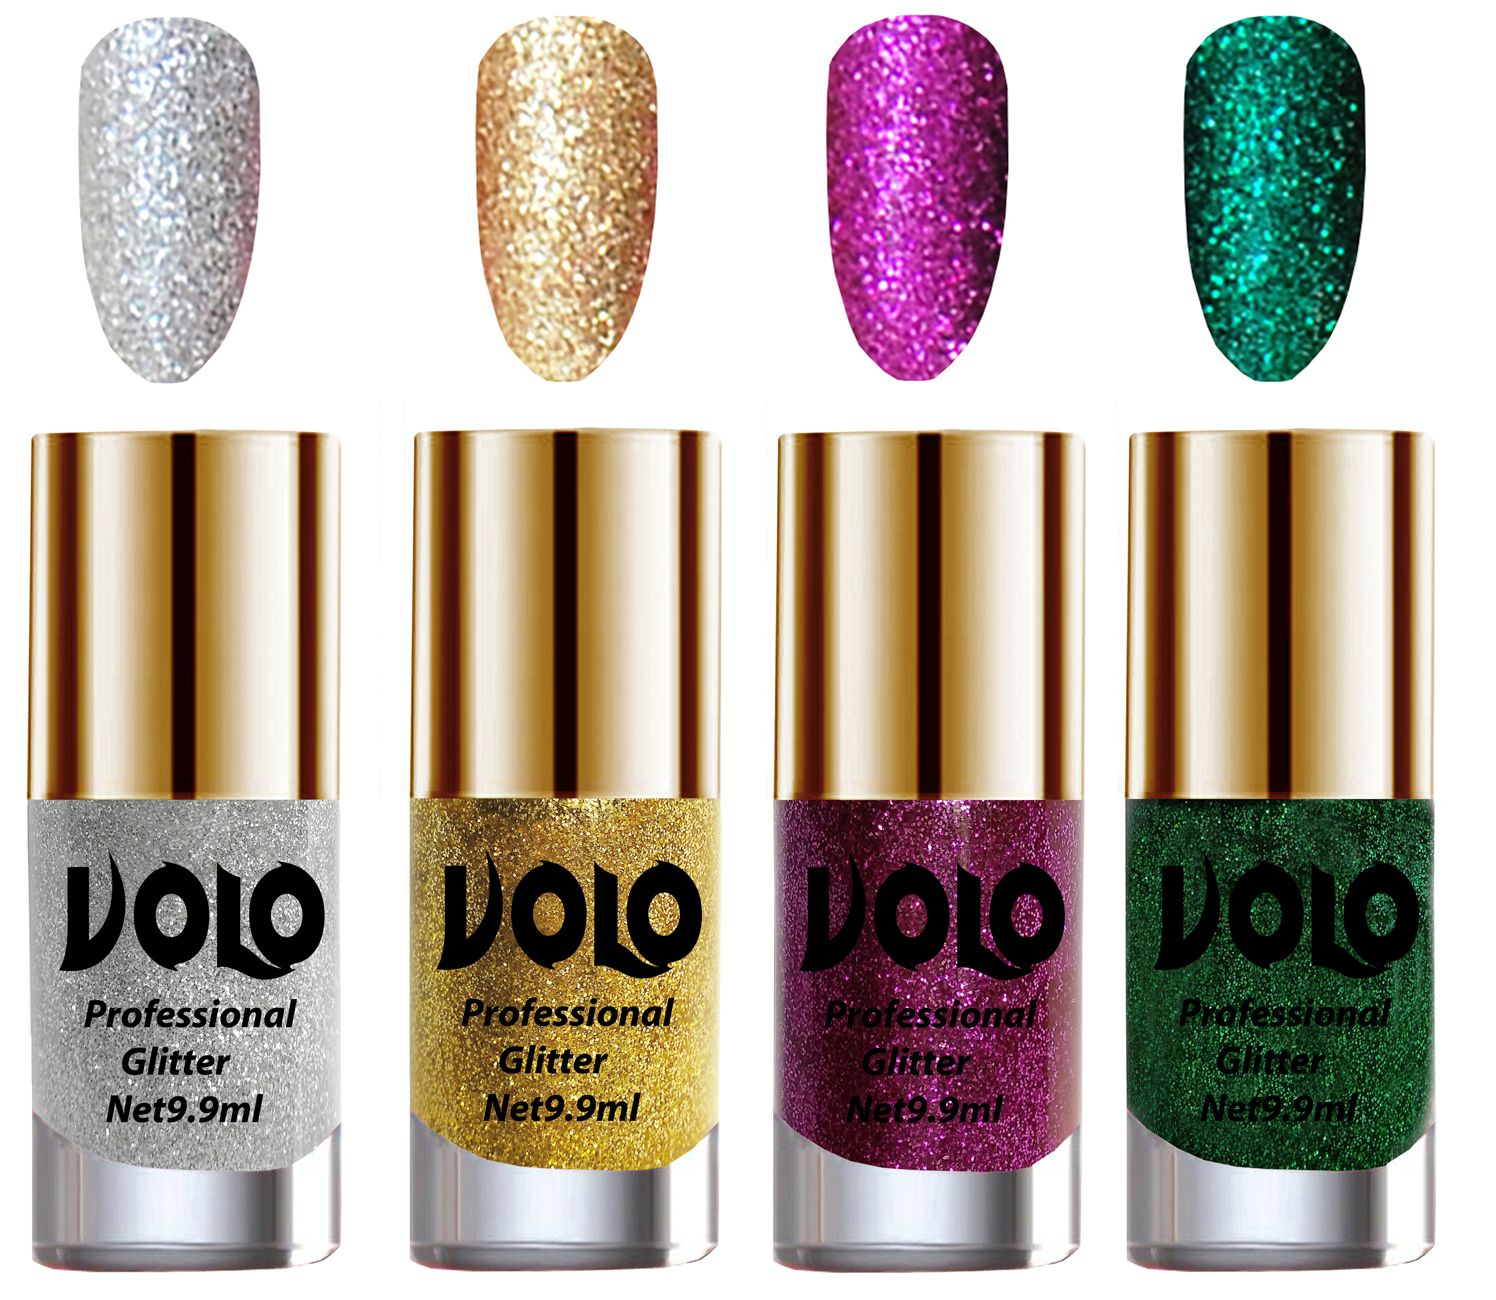     			VOLO Professionally Used Glitter Shine Nail Polish Silver,Gold,Purple Green Pack of 4 39 mL